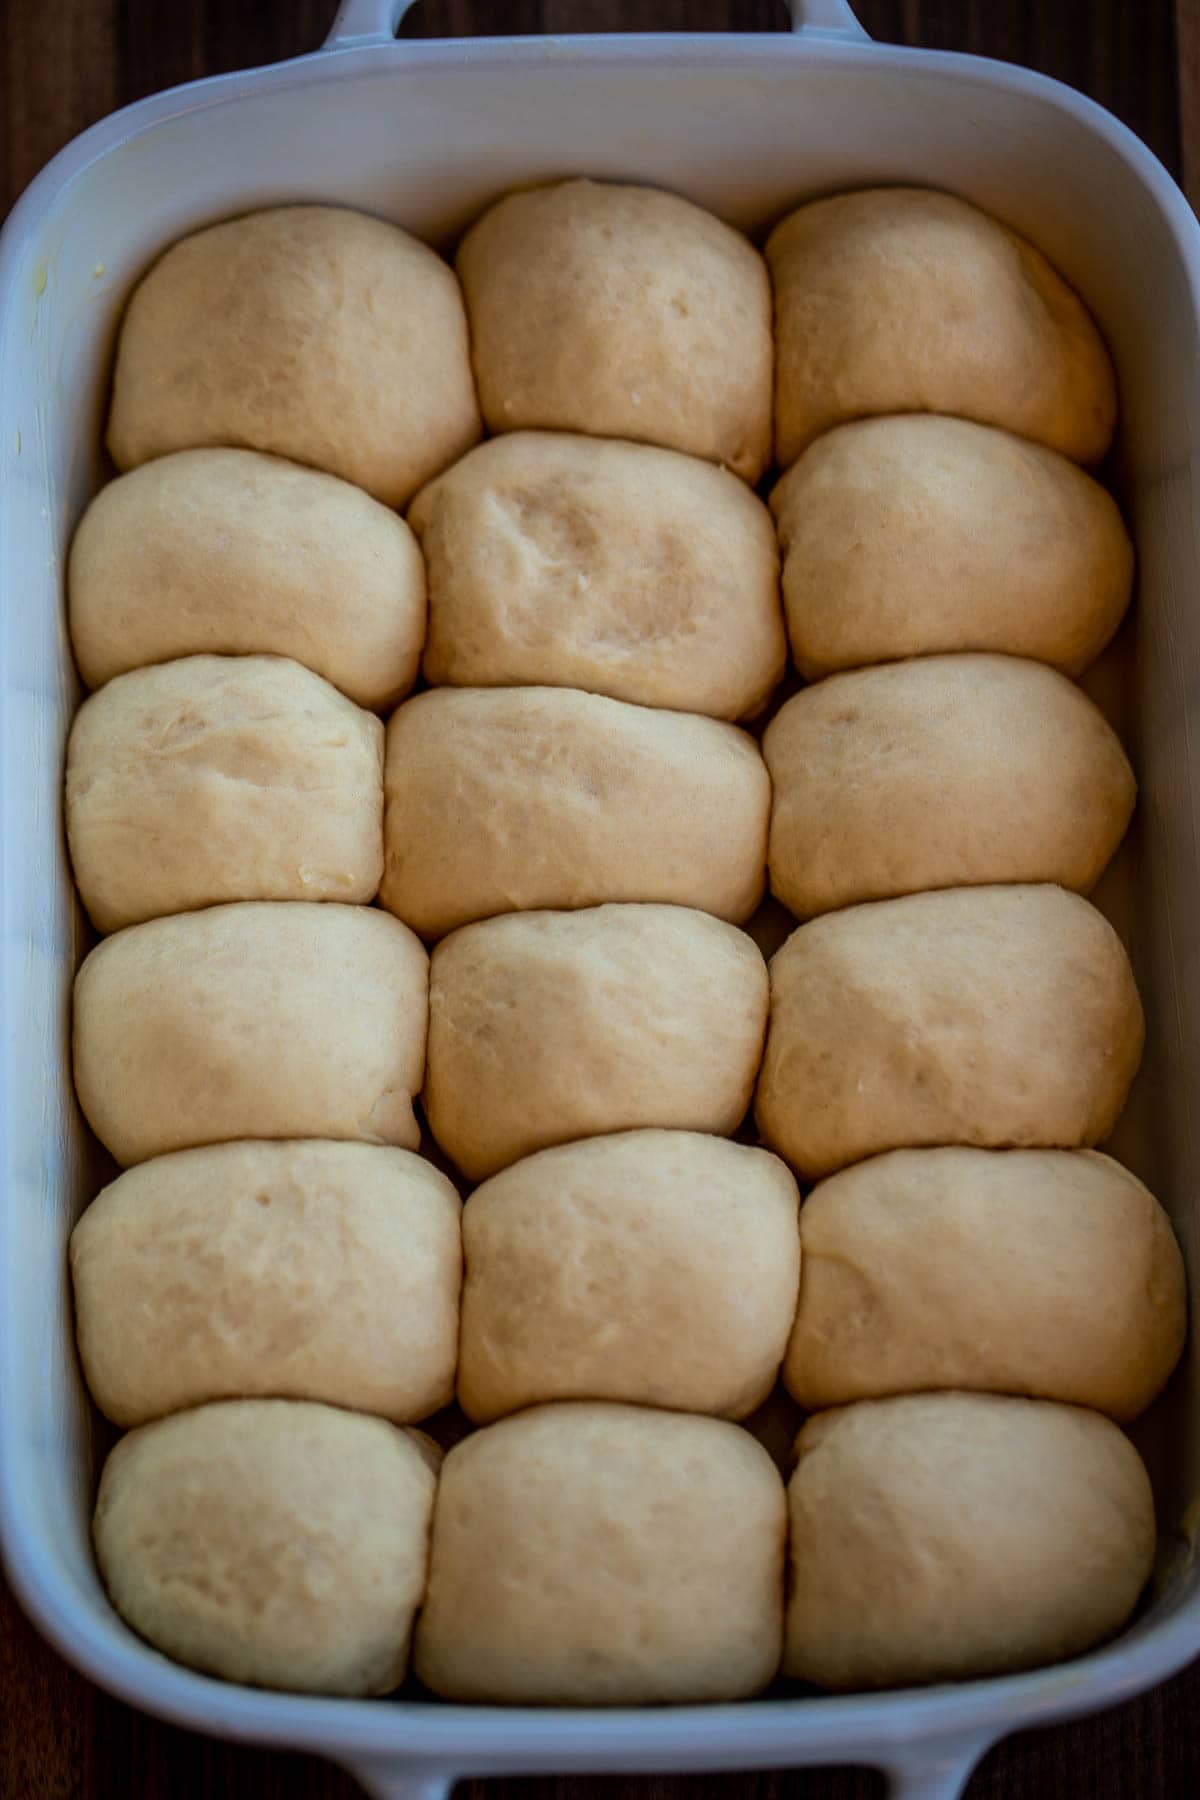 Risen rolls in baking dish